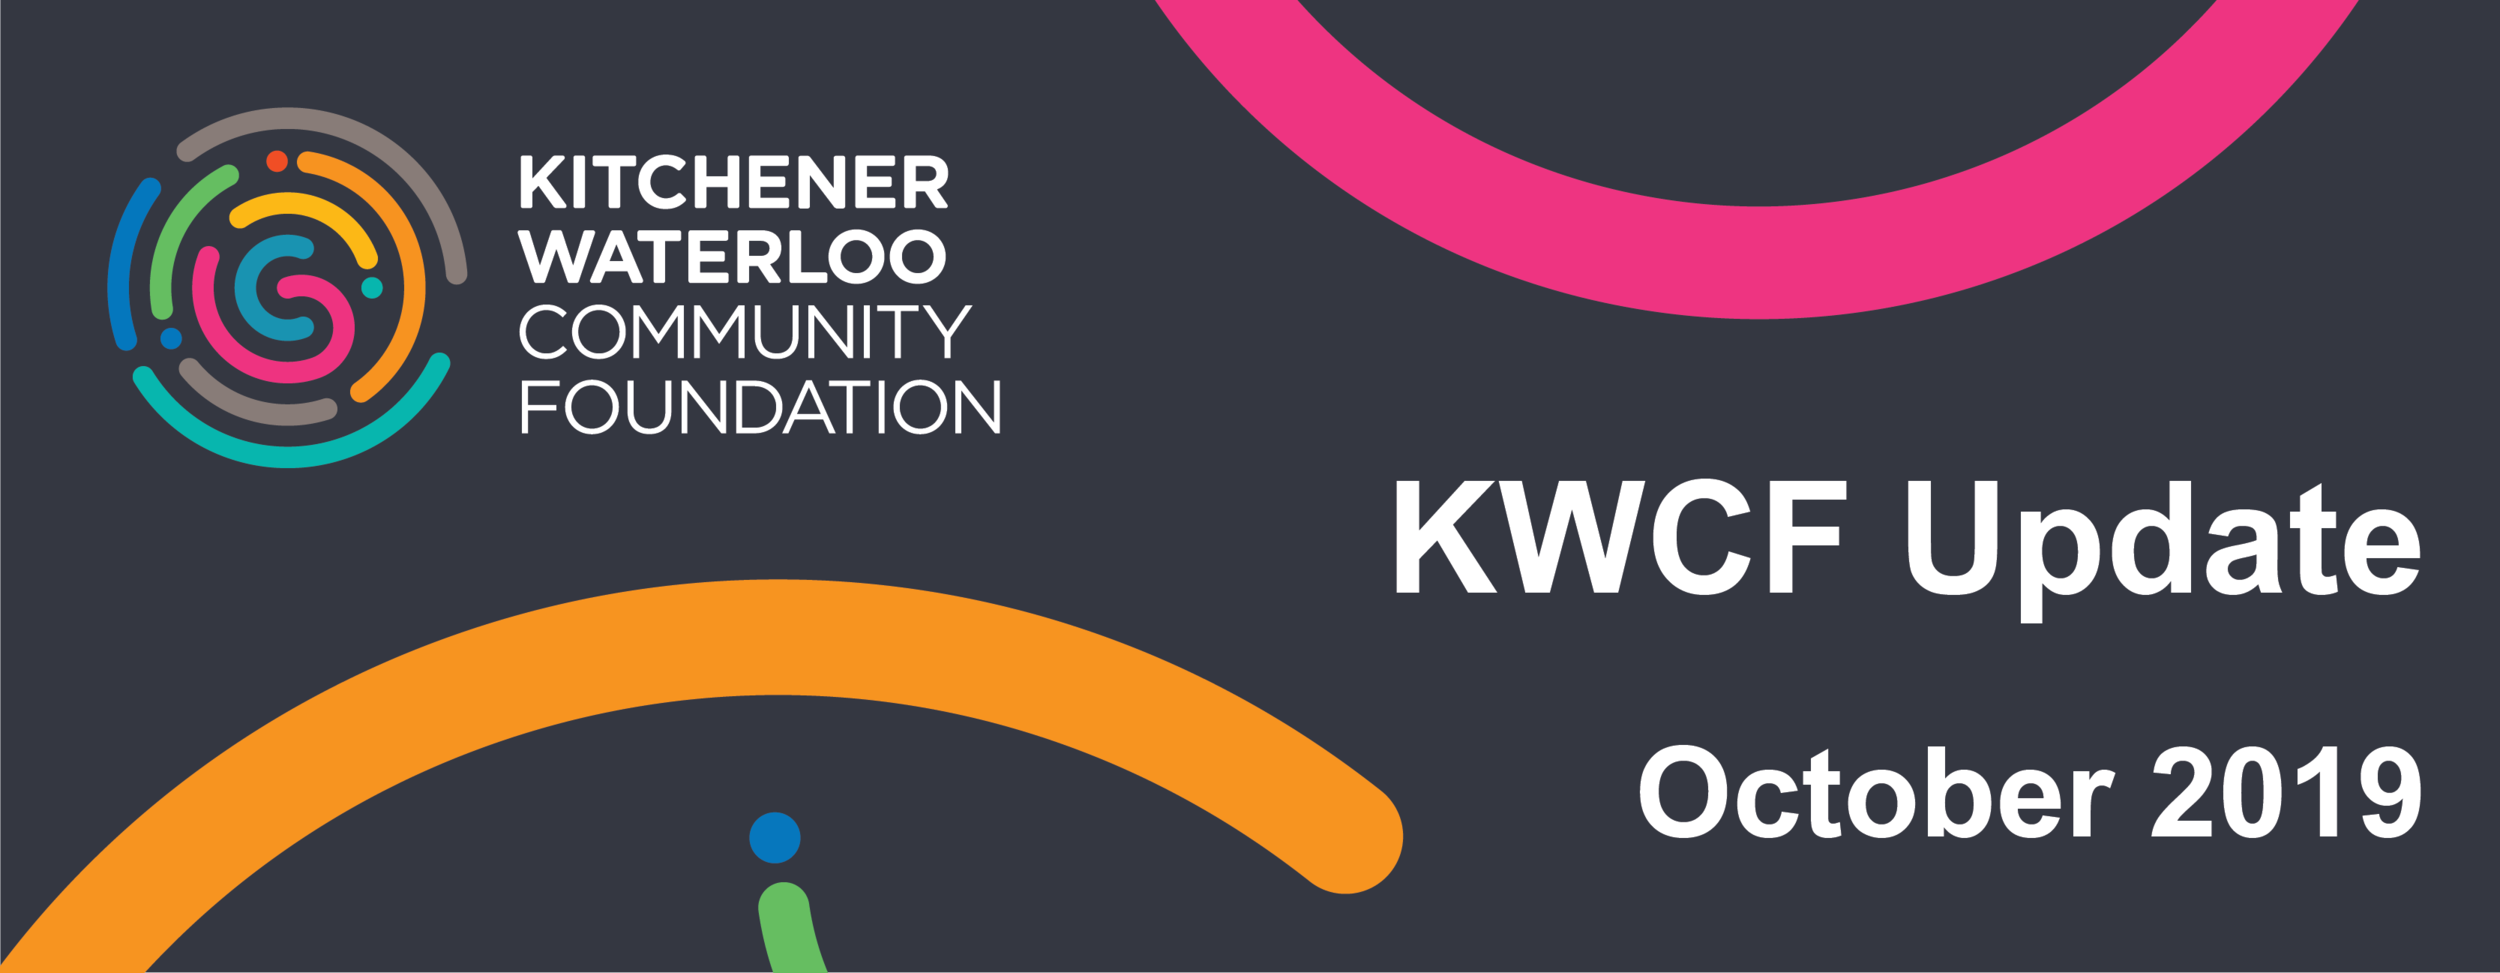 Kitchener waterloo community foundation jobs